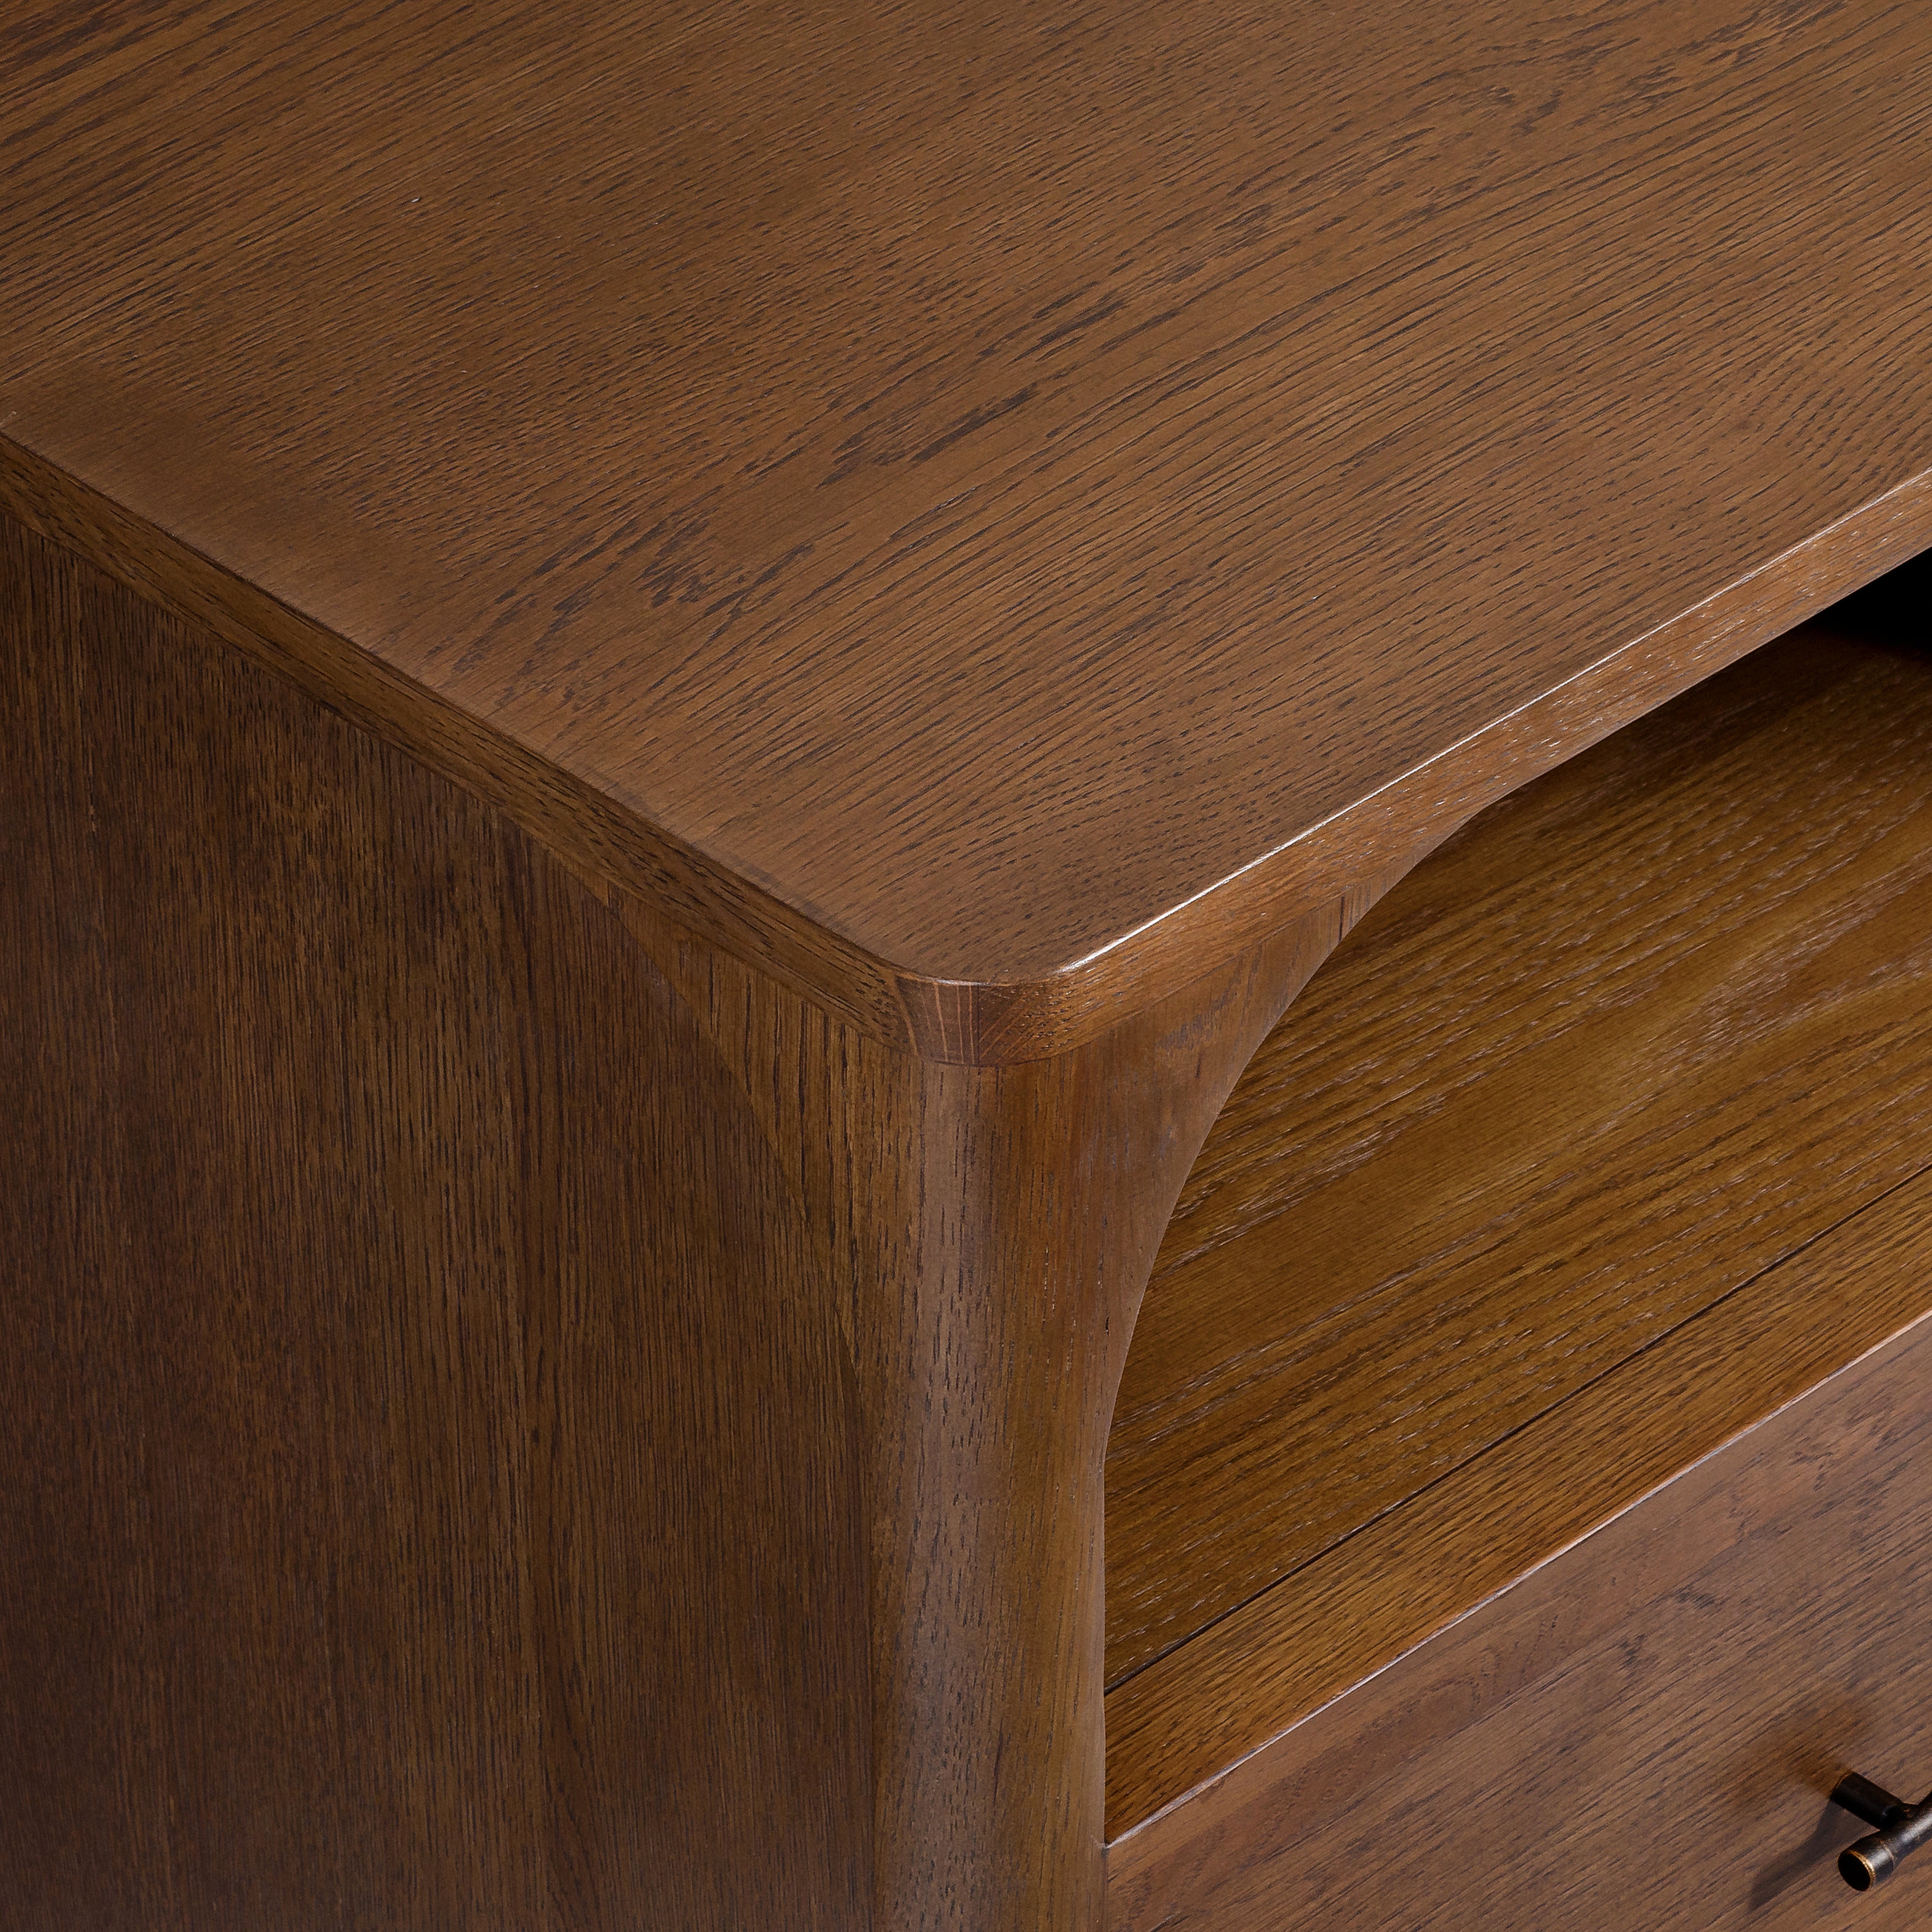 Cali 6-Drawer Oak Dresser